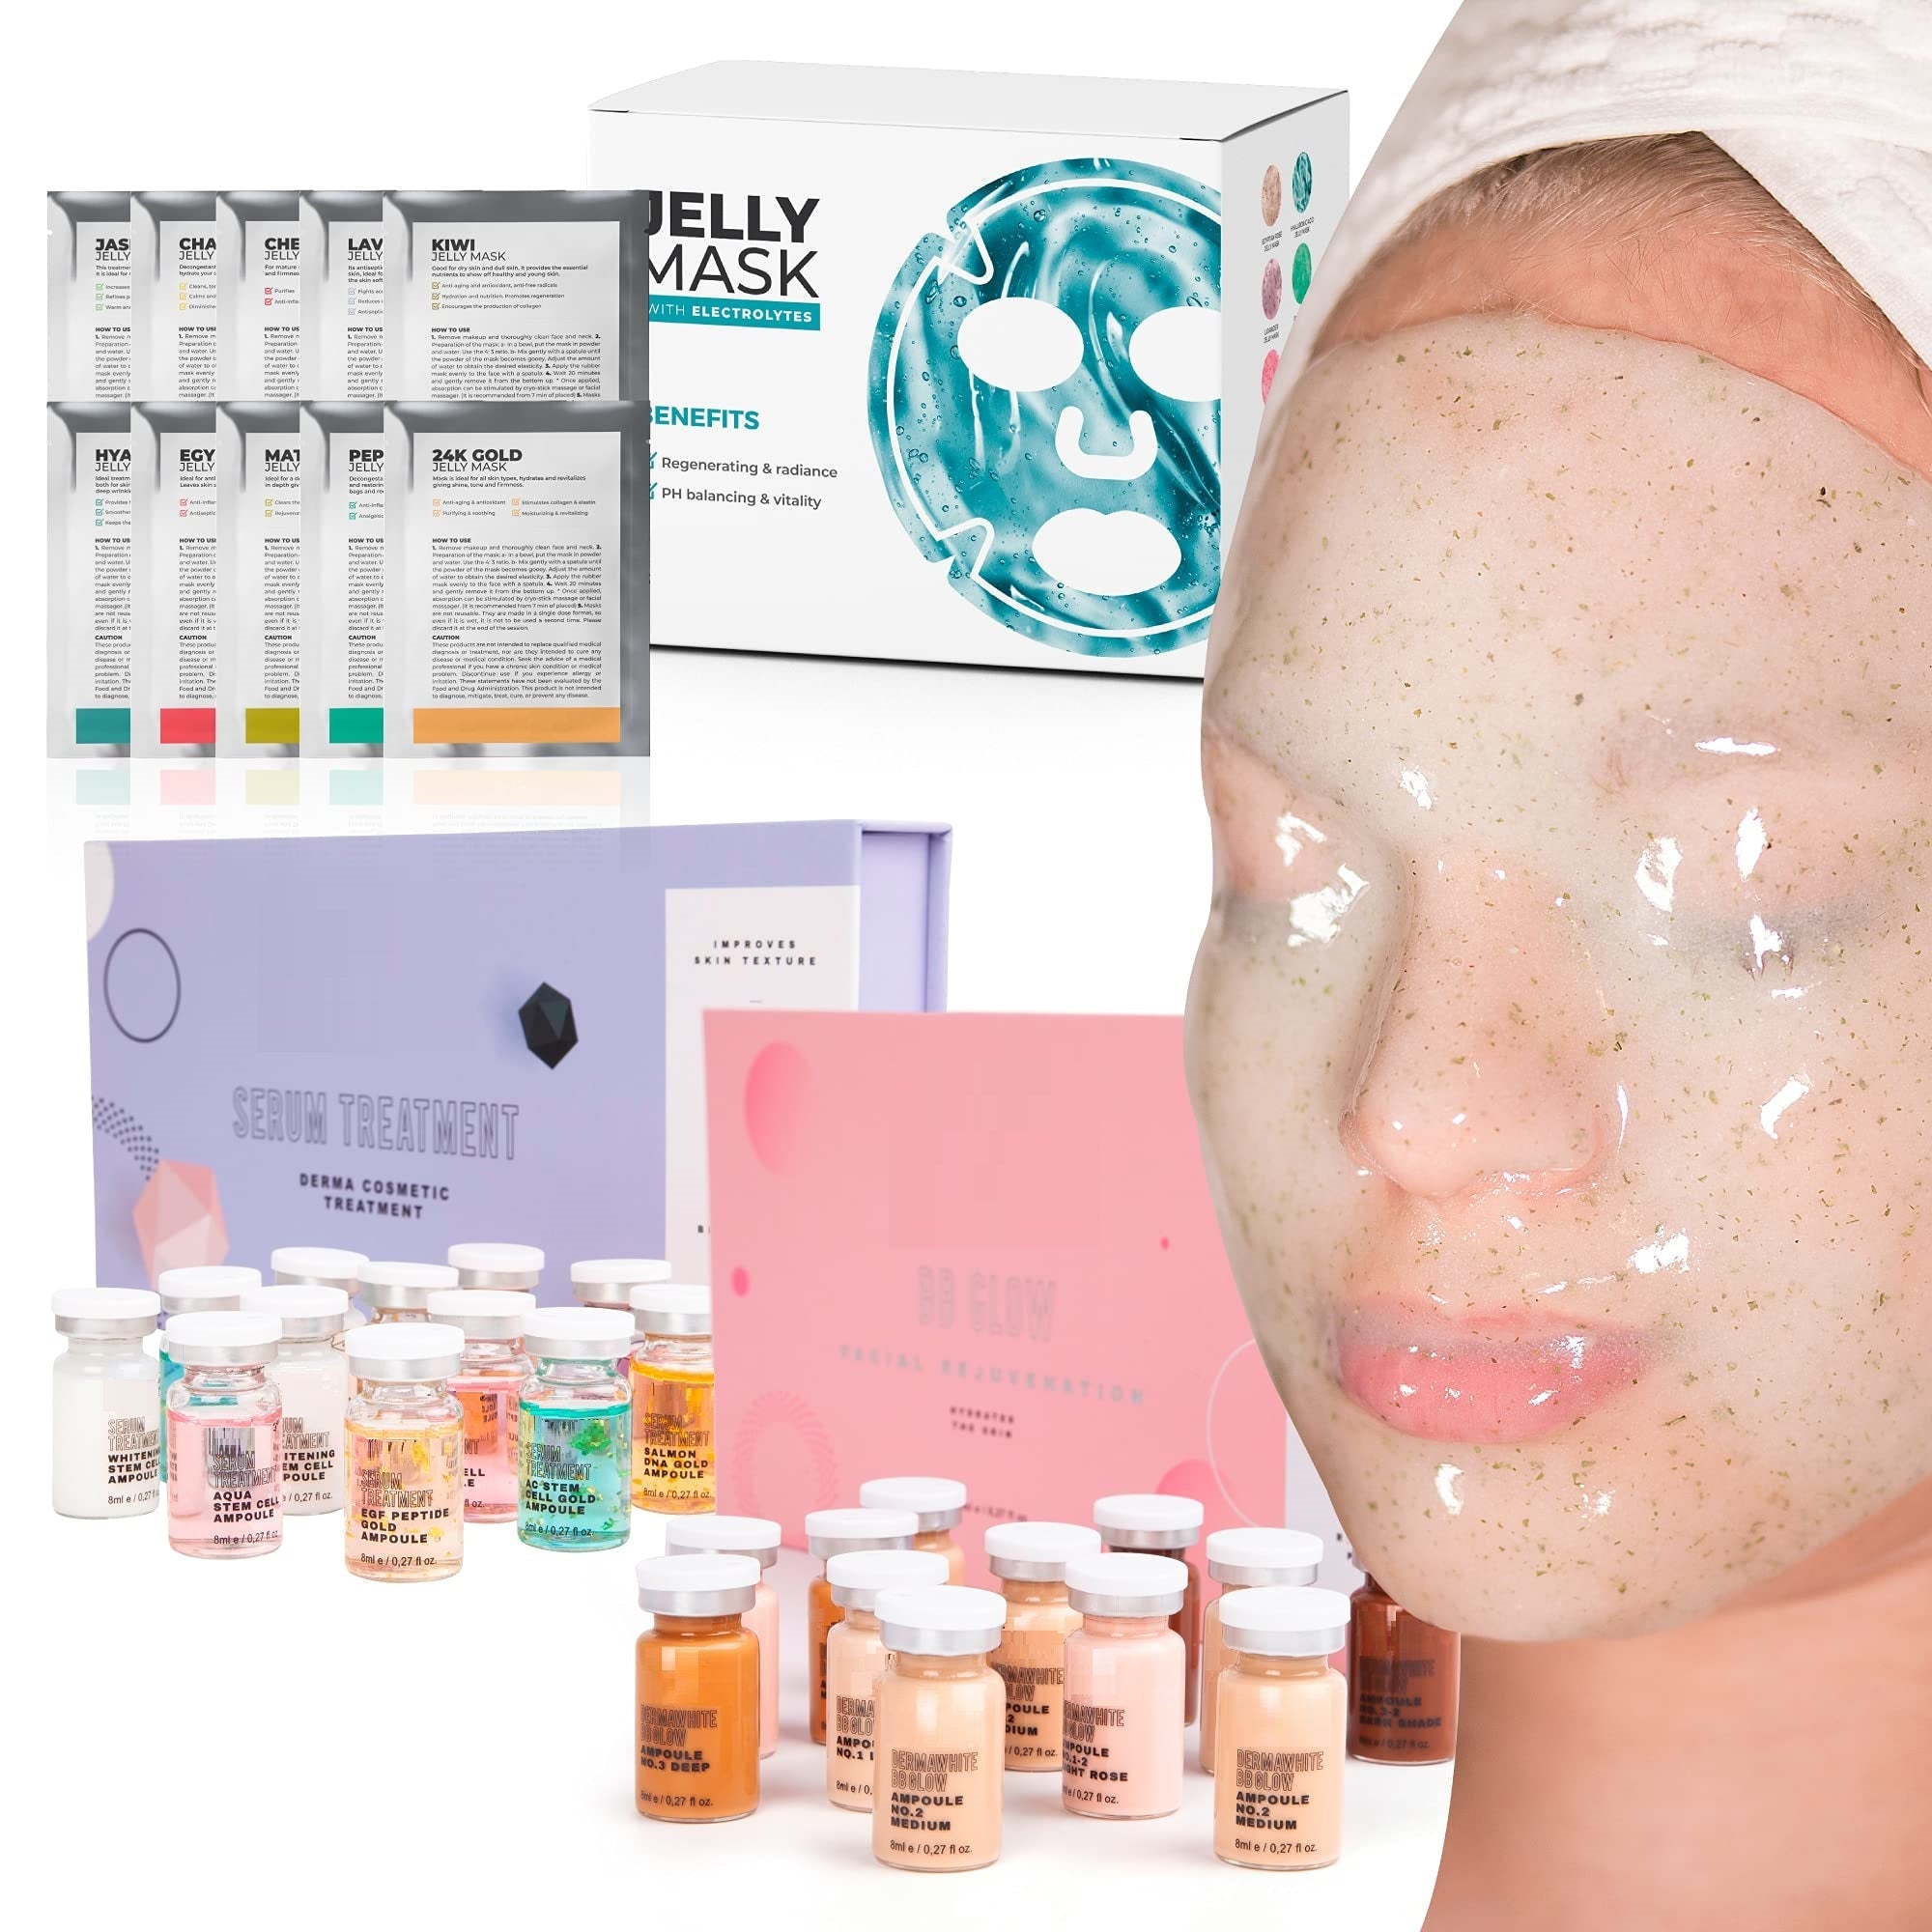 BB Glow + Booster Serum Treatment + Peel-Off Jelly Mask 10 Treatments